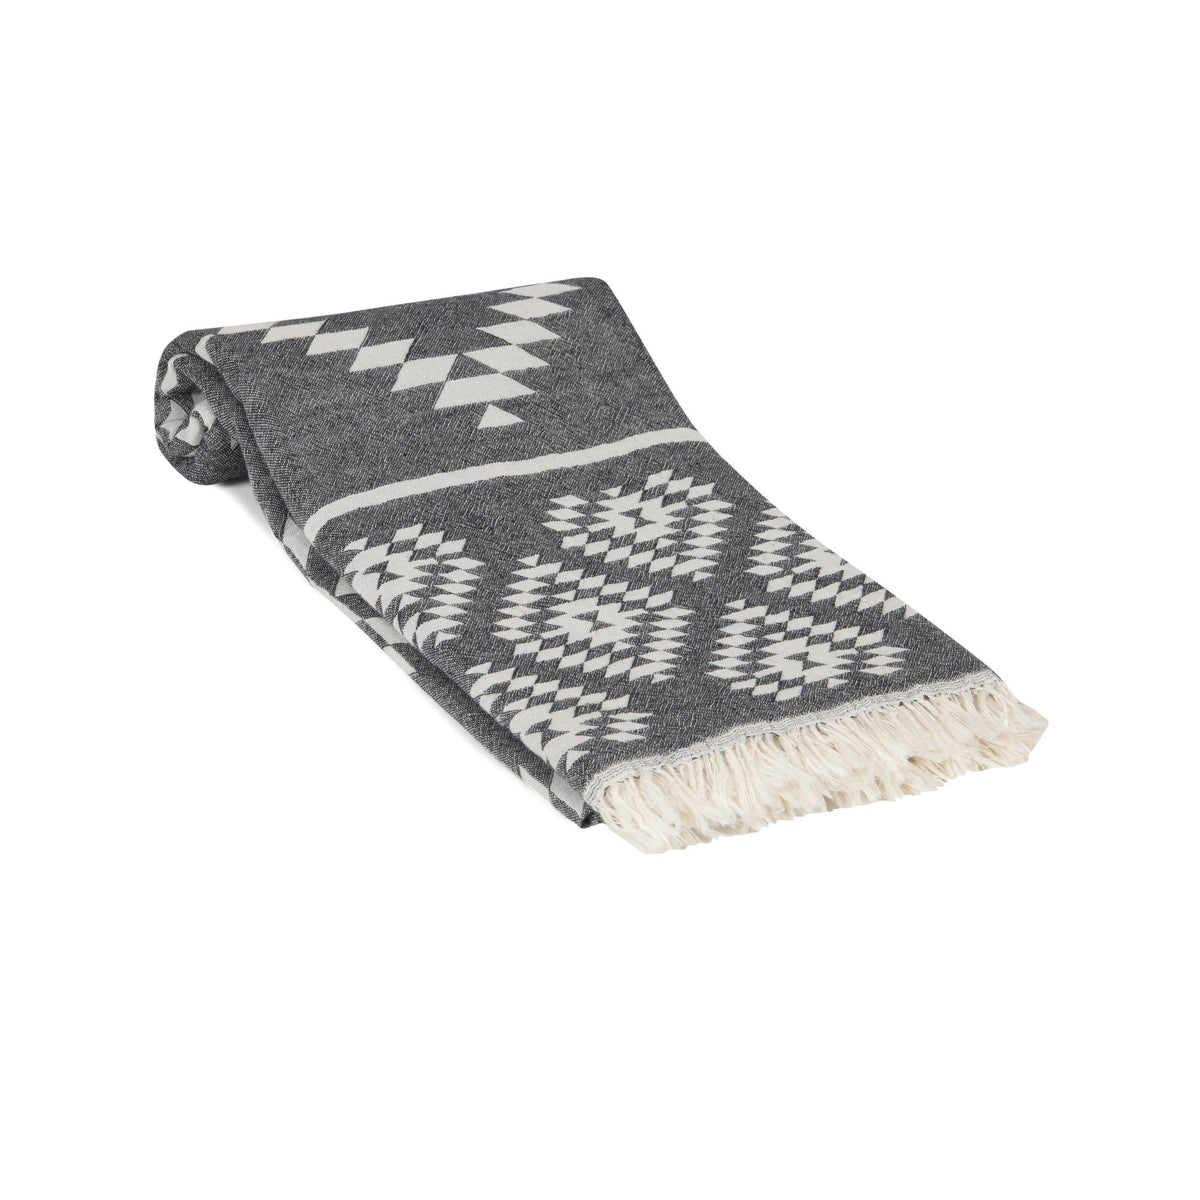 Aztec Turkish Towel / Throw